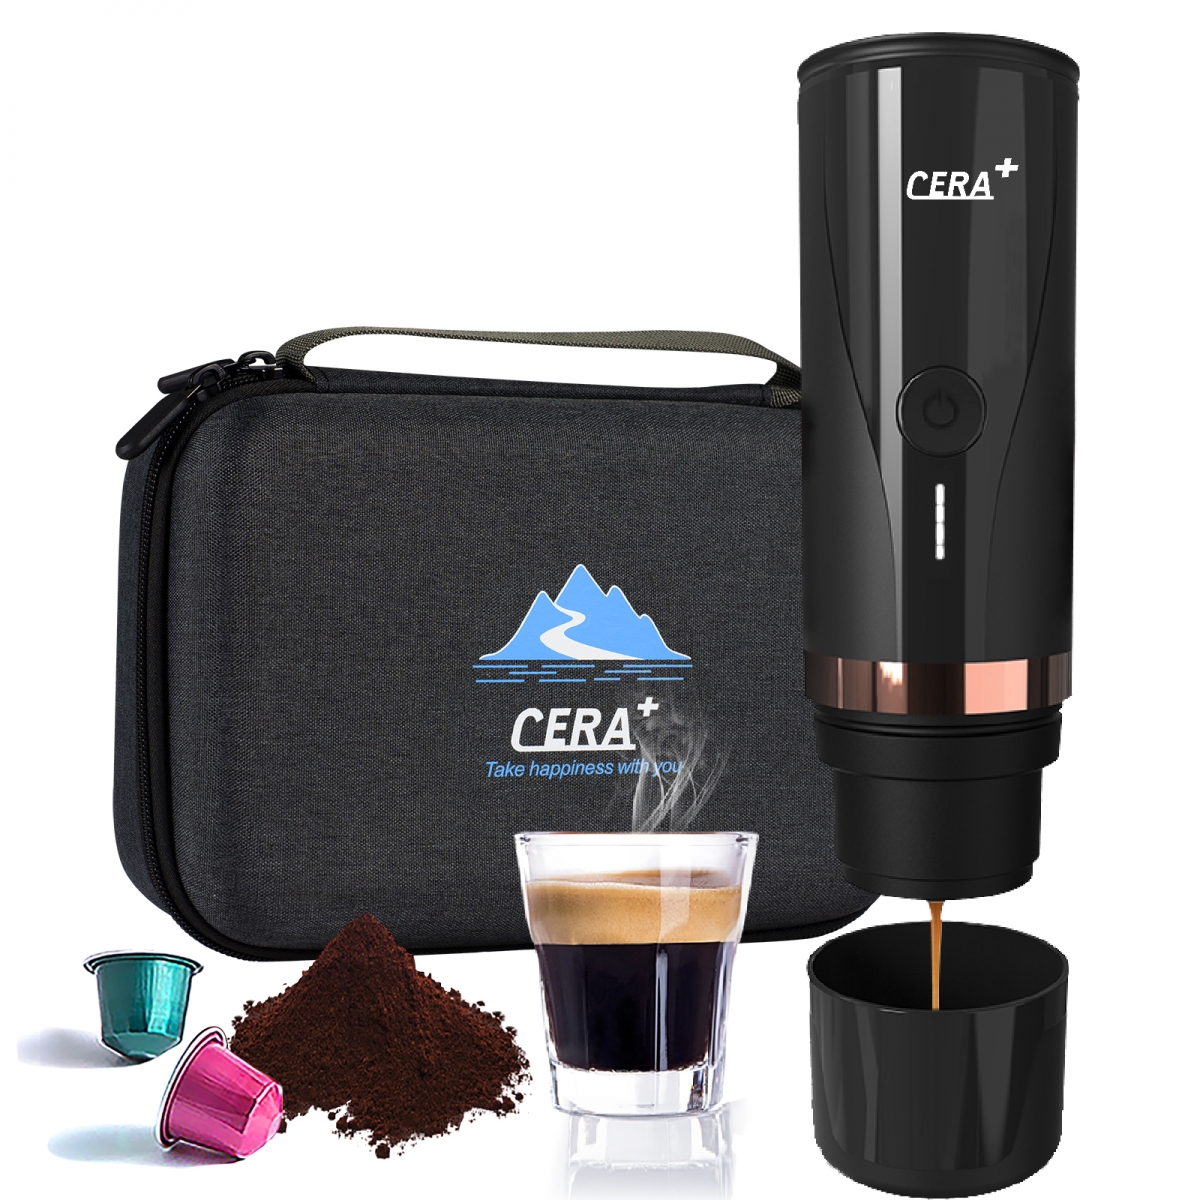 Best portable electric coffee maker，portable coffee maker for travel，portable coffee maker for travel，selling-CERA+| Portable Espresso Maker,Smart Warming Mug